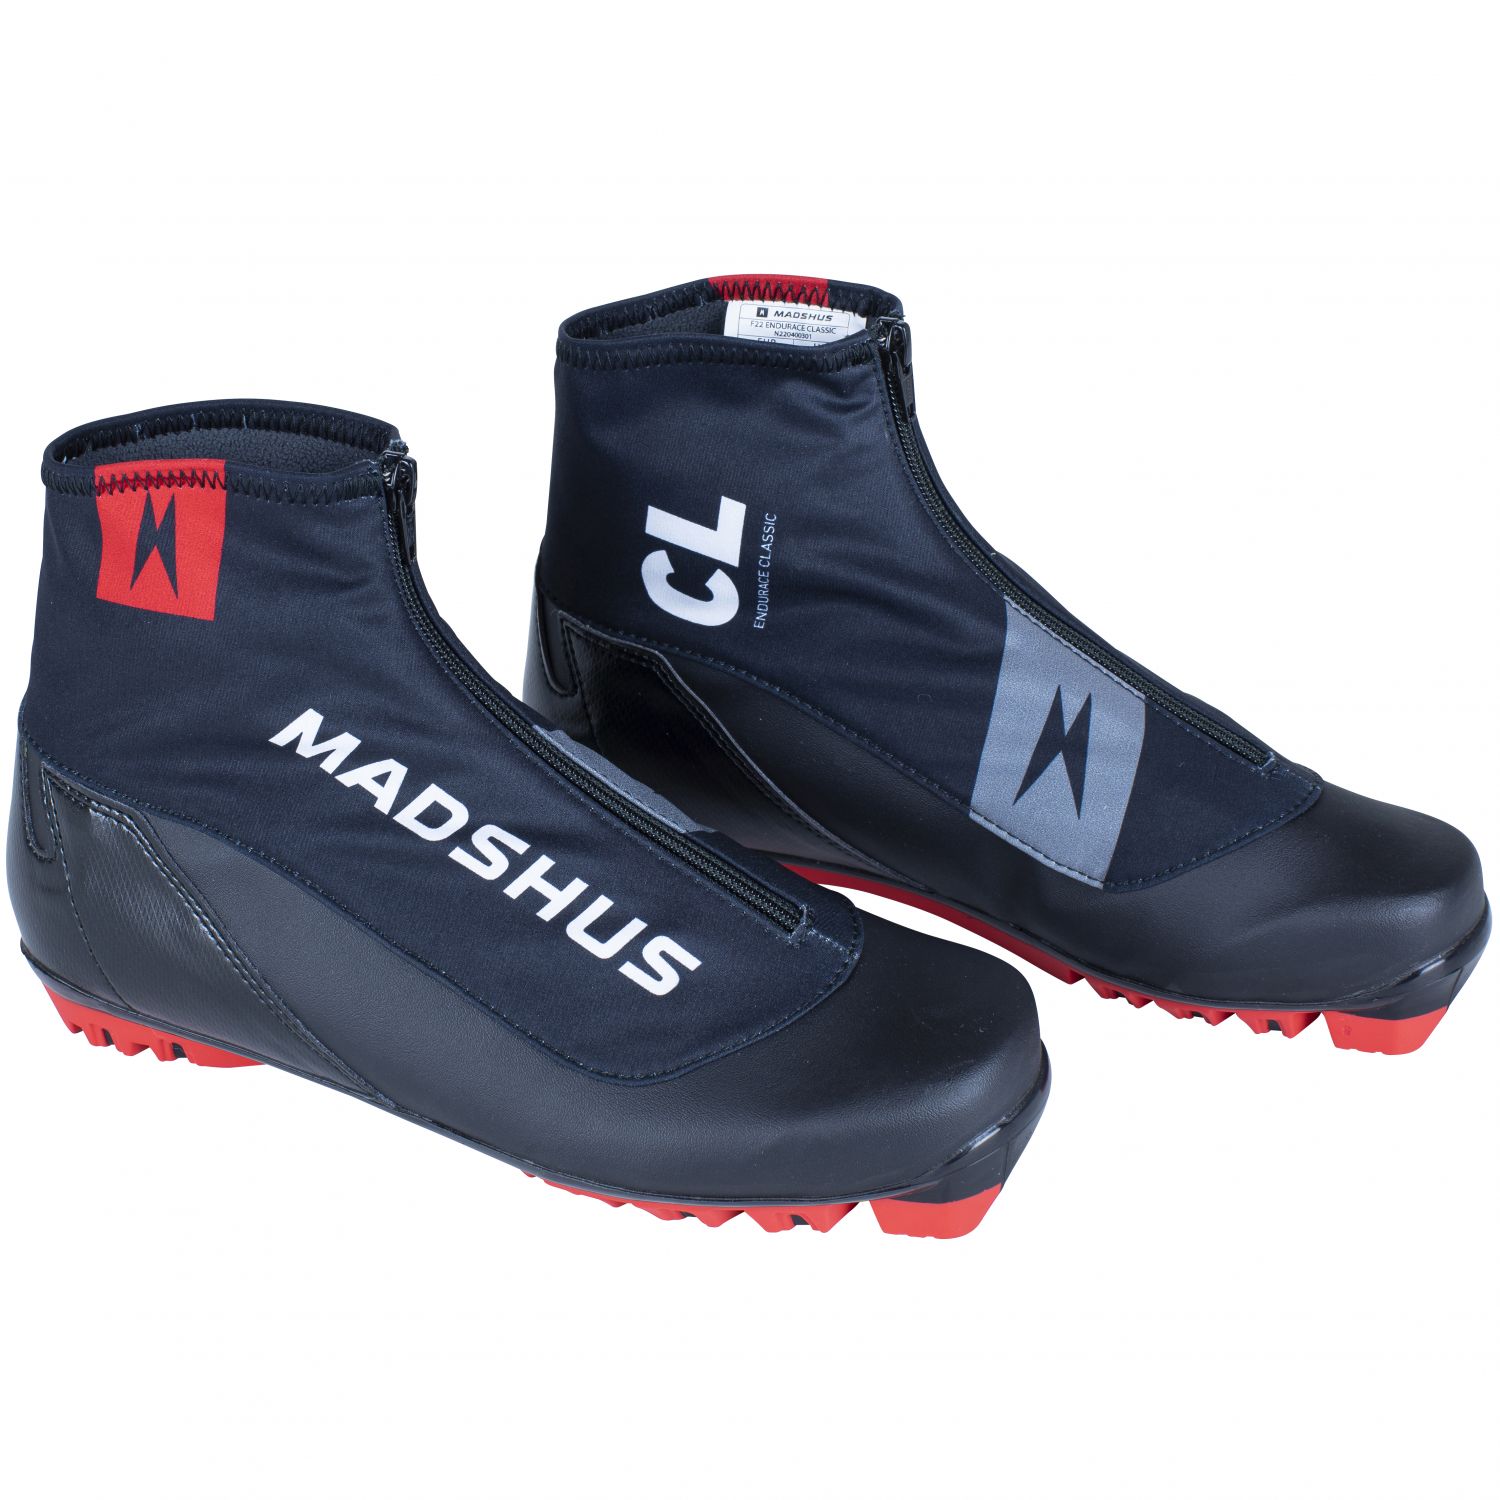 Madhus Endurance Classic, nordic boots, black